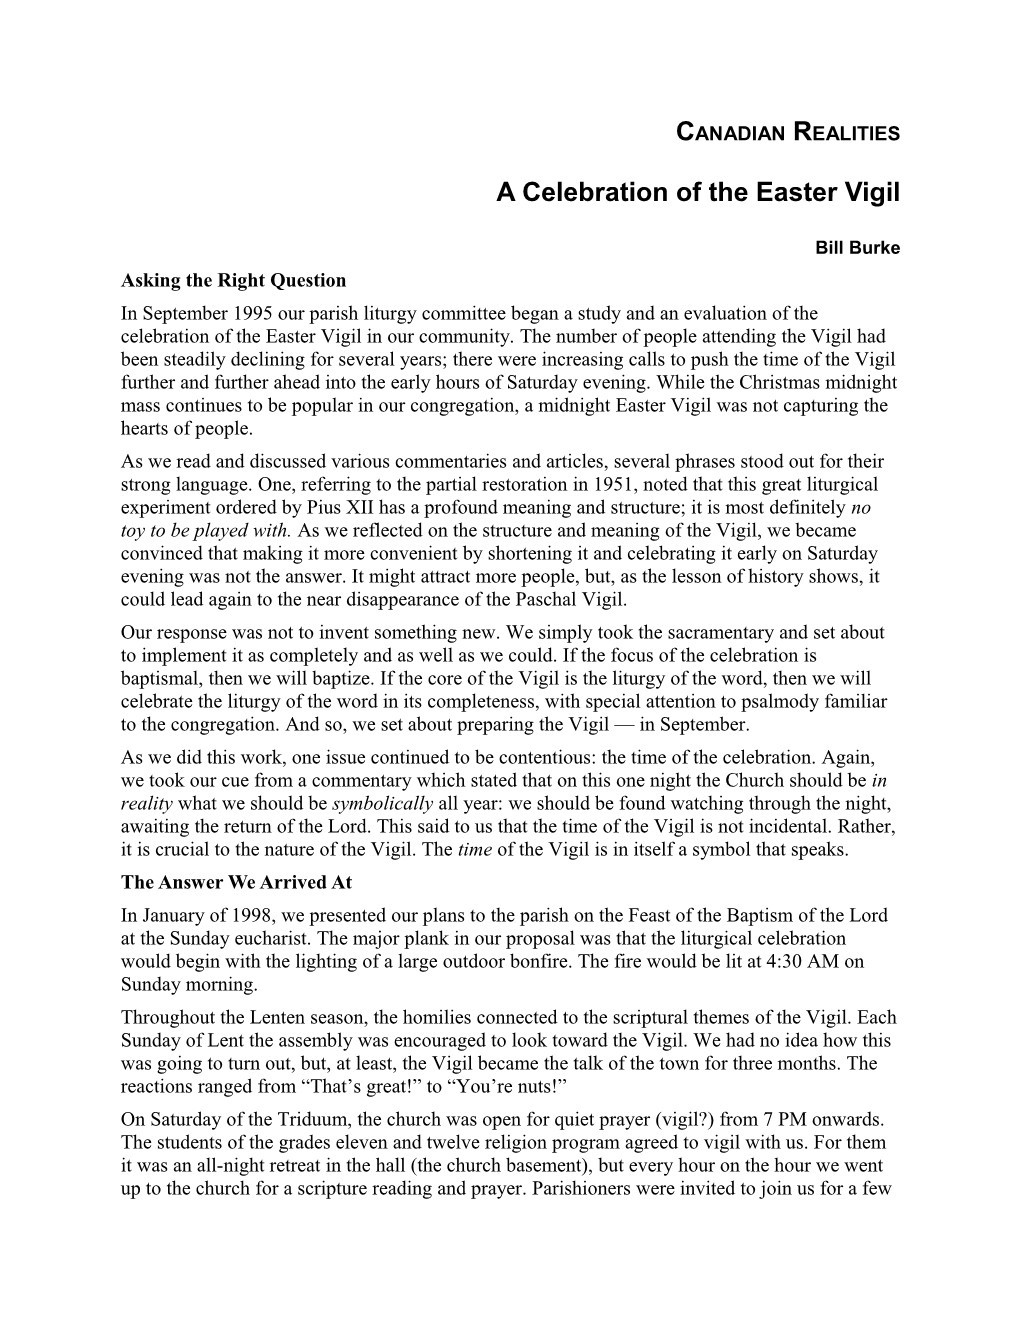 A Celebration of the Easter Vigil